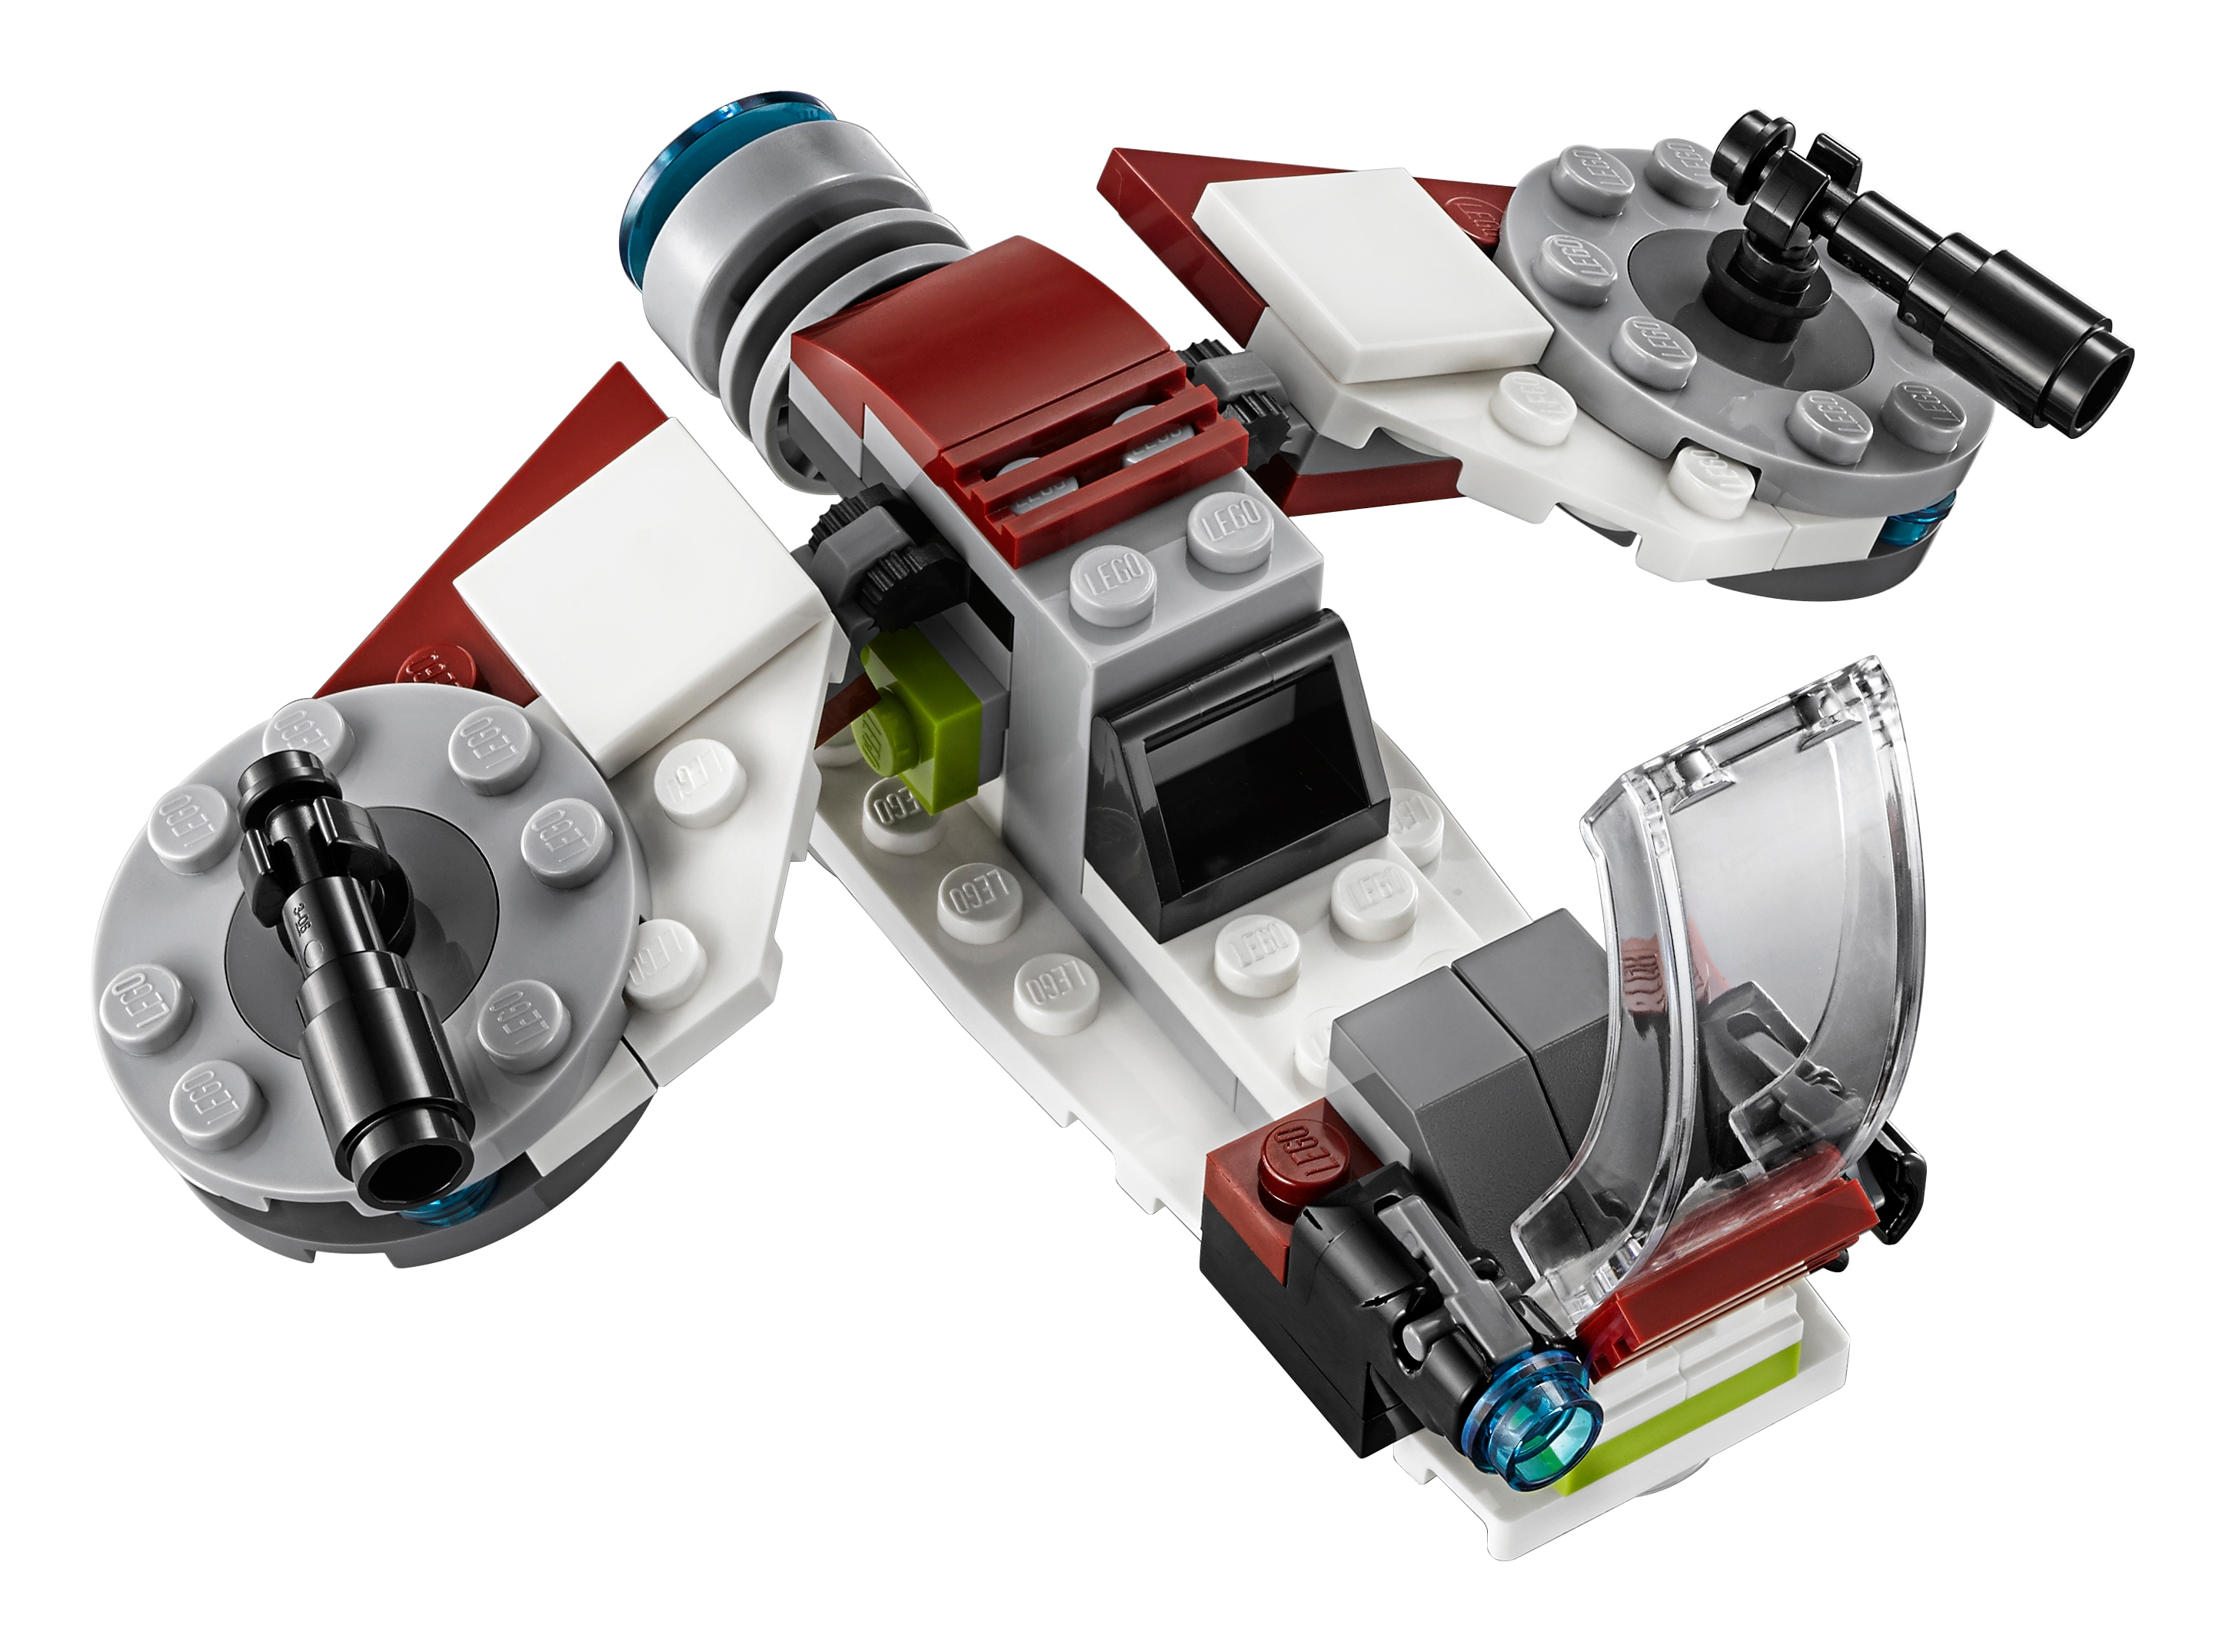 de Set 75206 Lego Star Wars Ki-adi-mundi Minifigura